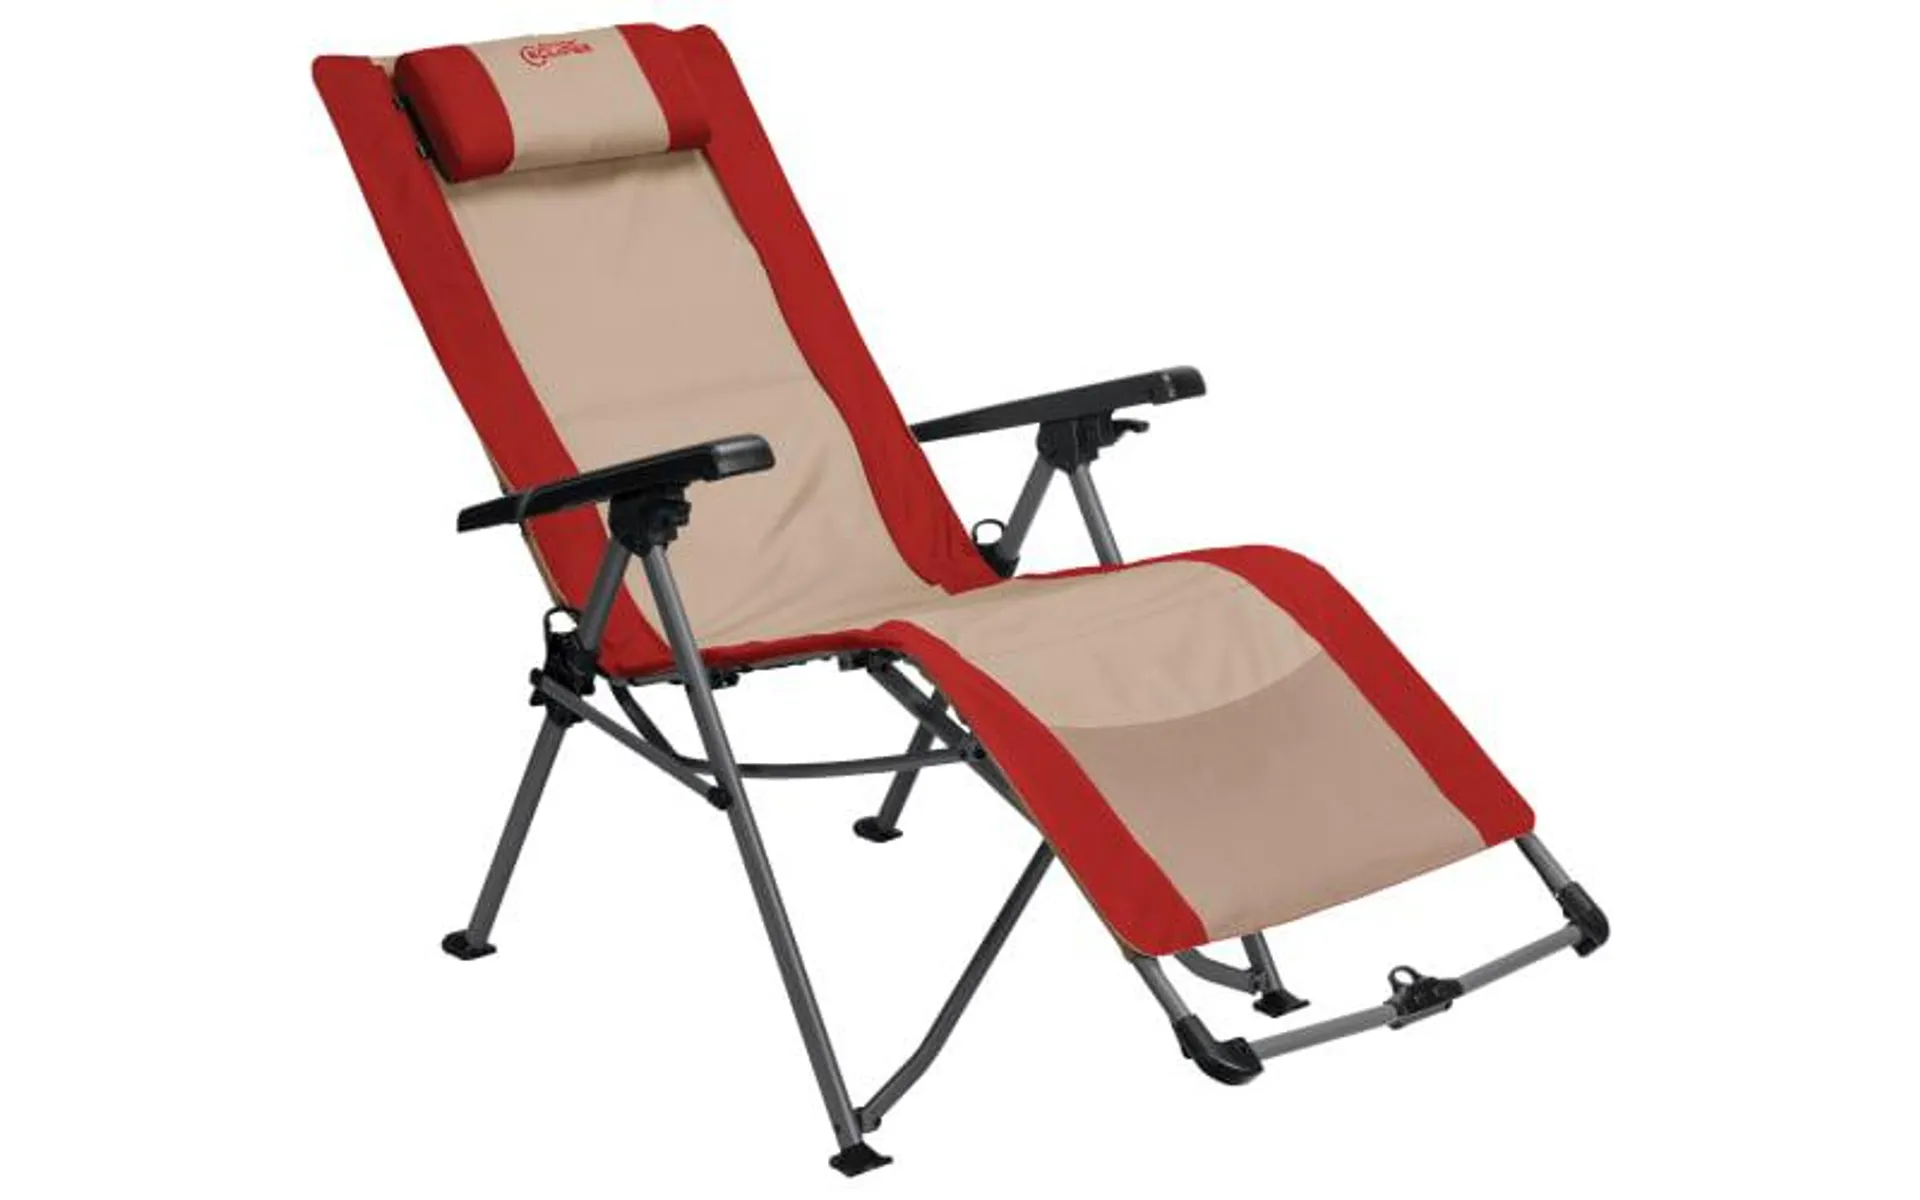 Bass Pro Shops Eclipse Quad Fold Zero-Gravity Lounger Chair